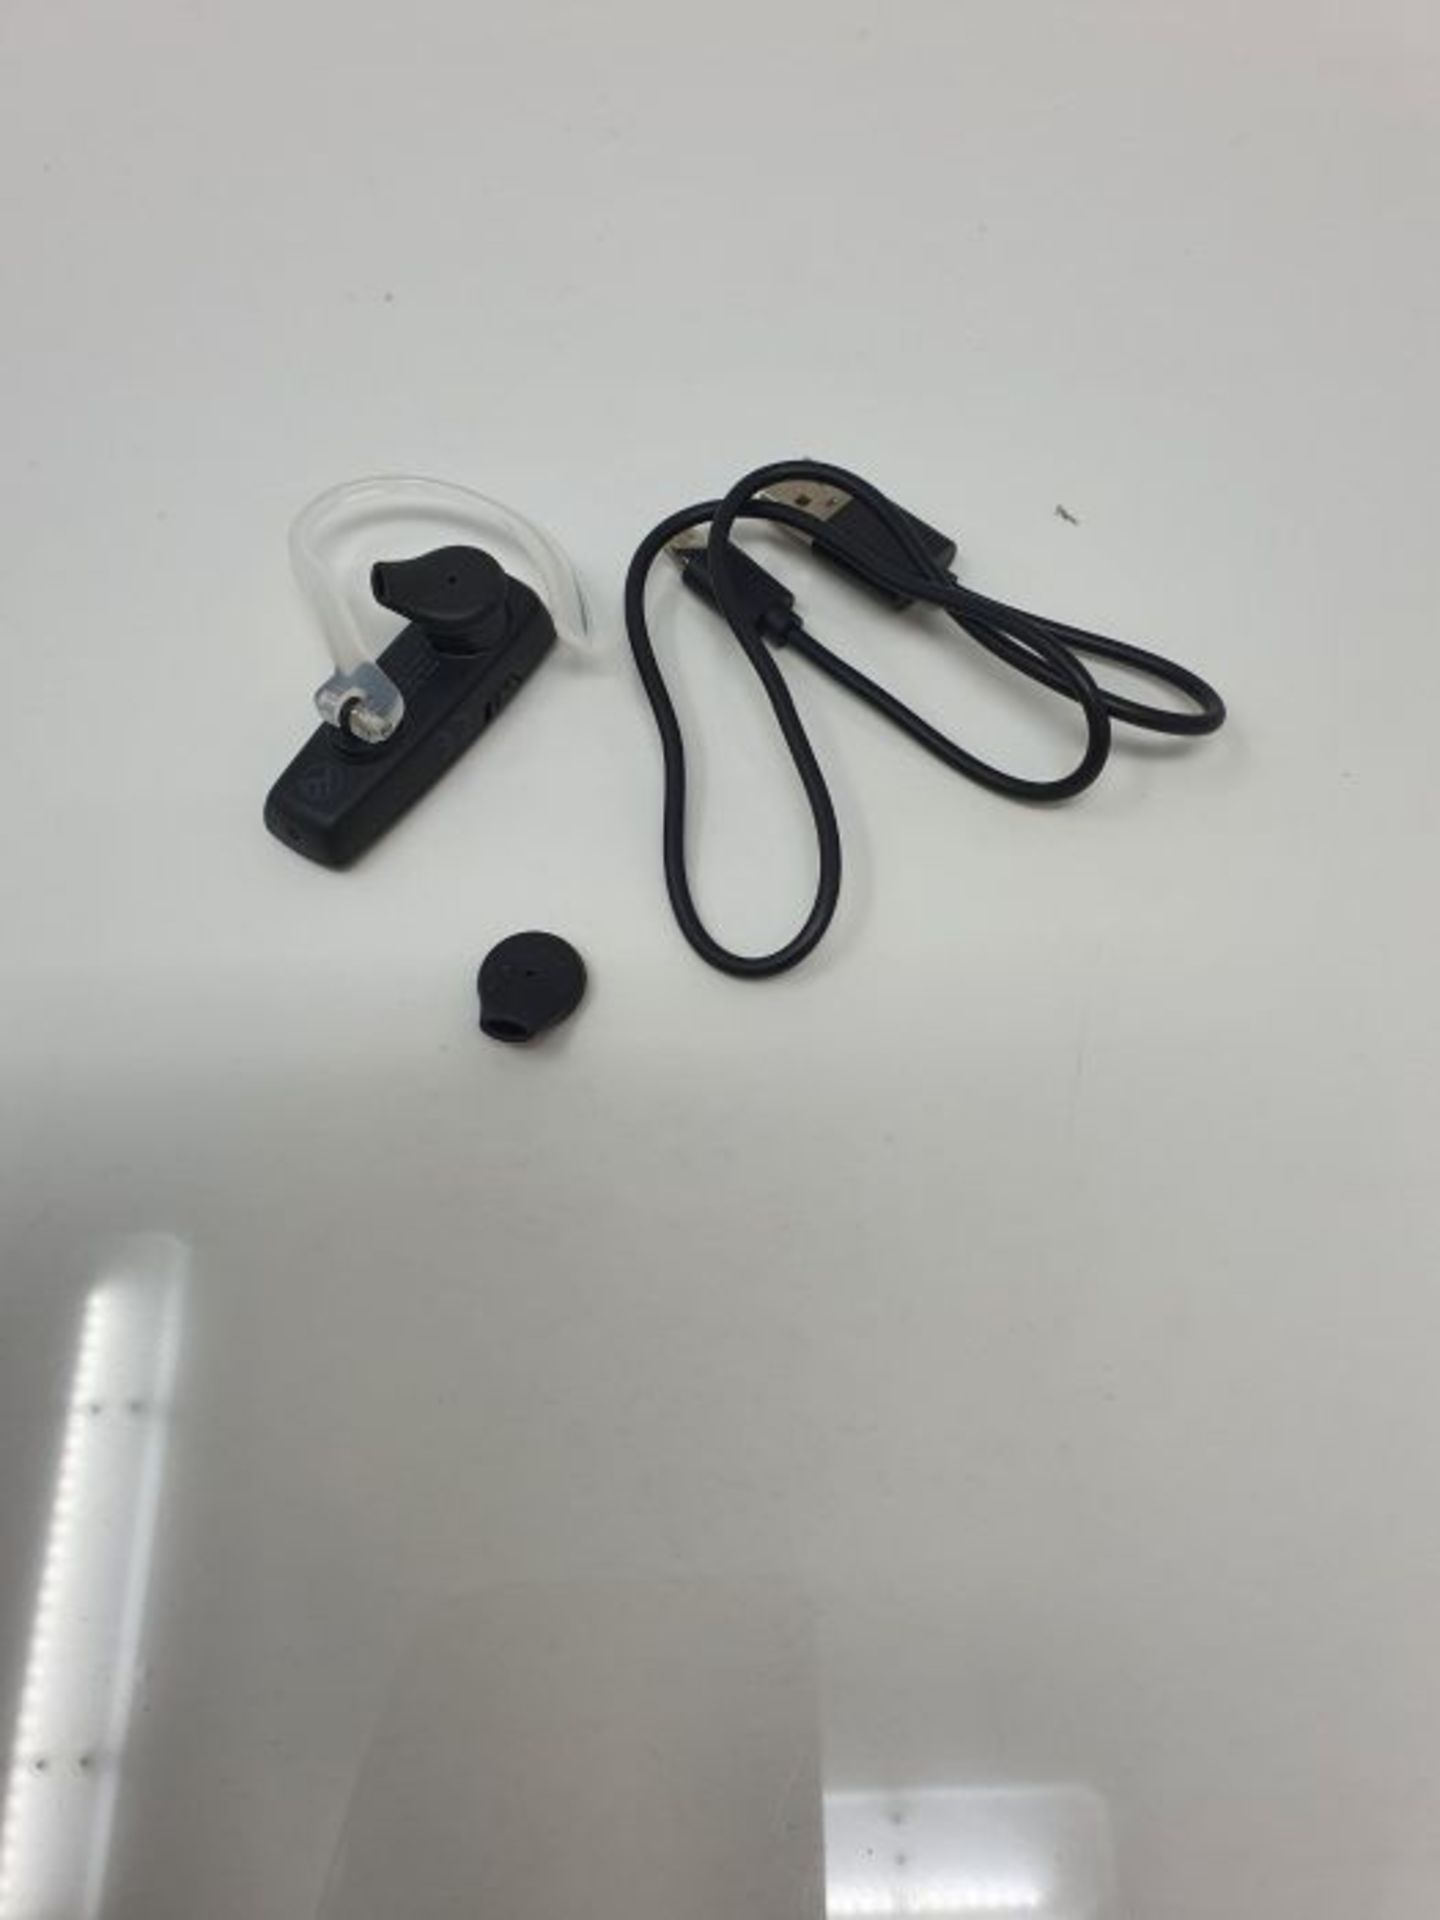 TELLUR Vox 55 Bluetooth Headset, Multipoint, Black - Image 3 of 3